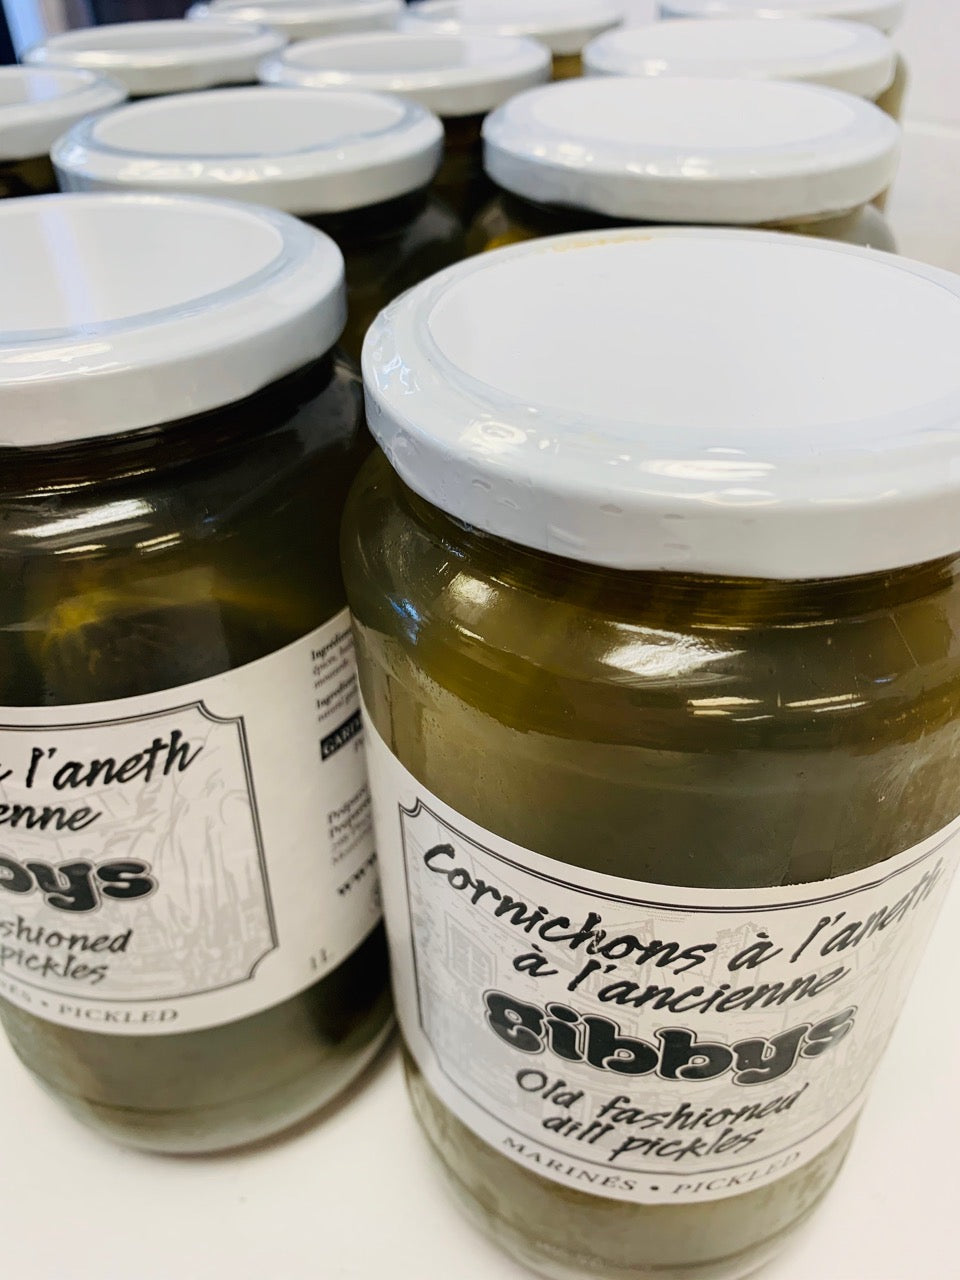 Gibbys Old-Fashioned Dill Pickles I Les cornichons à l'aneth à l'ancienne de Gibbys